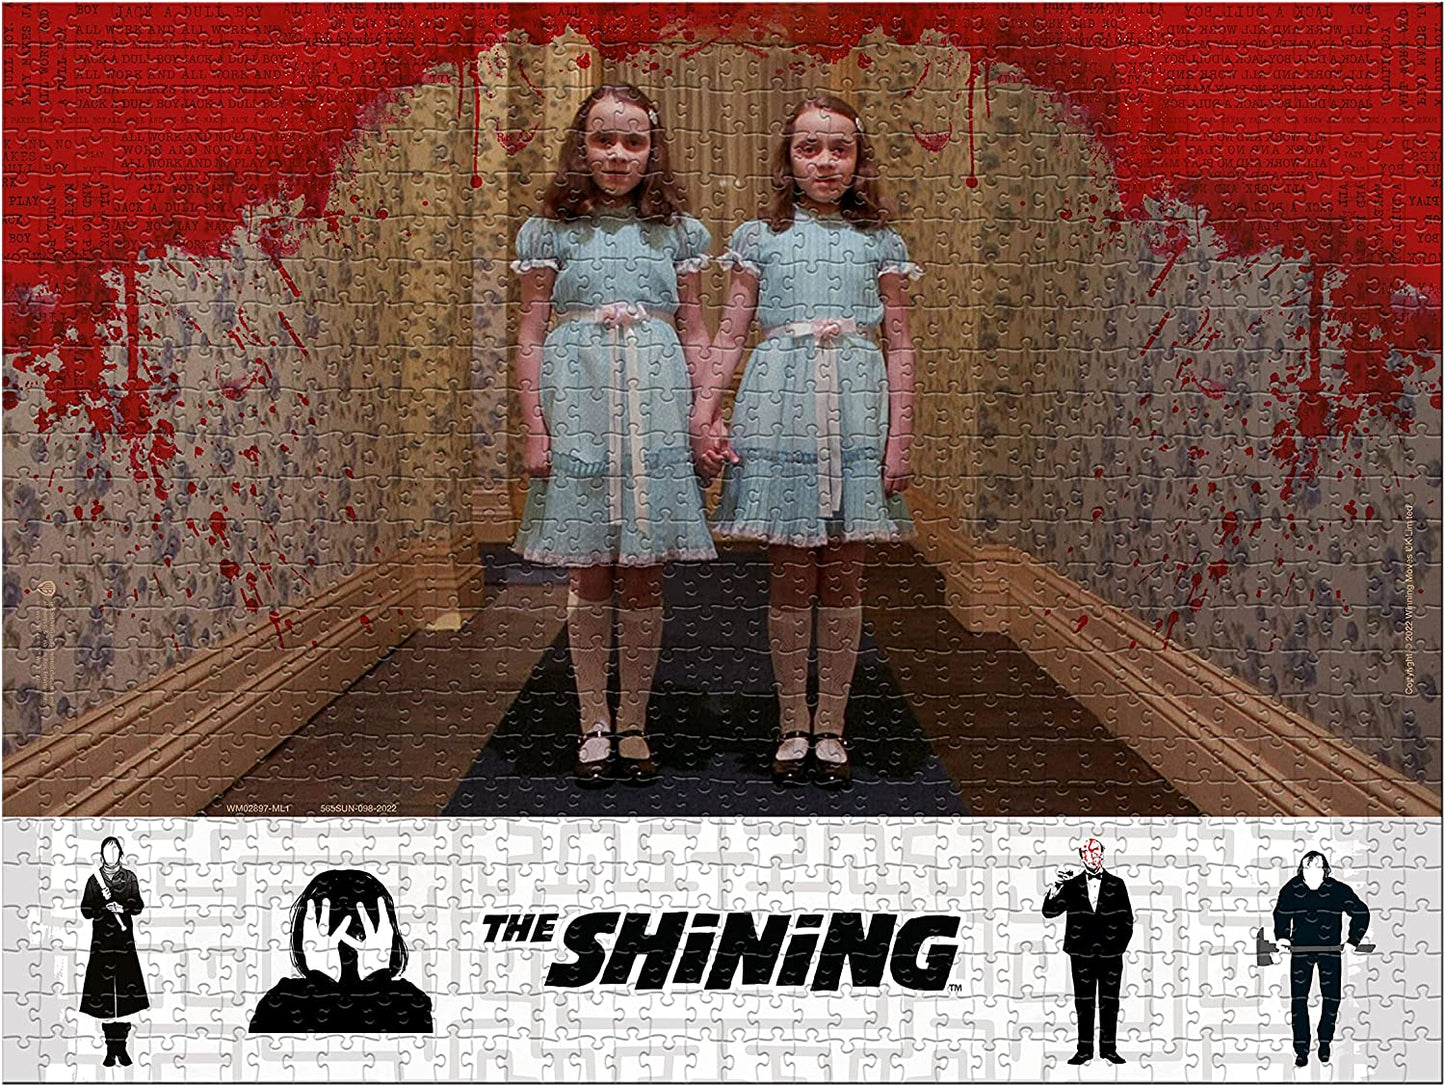 [Damaged Box] The Shining - 1000 Piece Jigsaw Puzzle